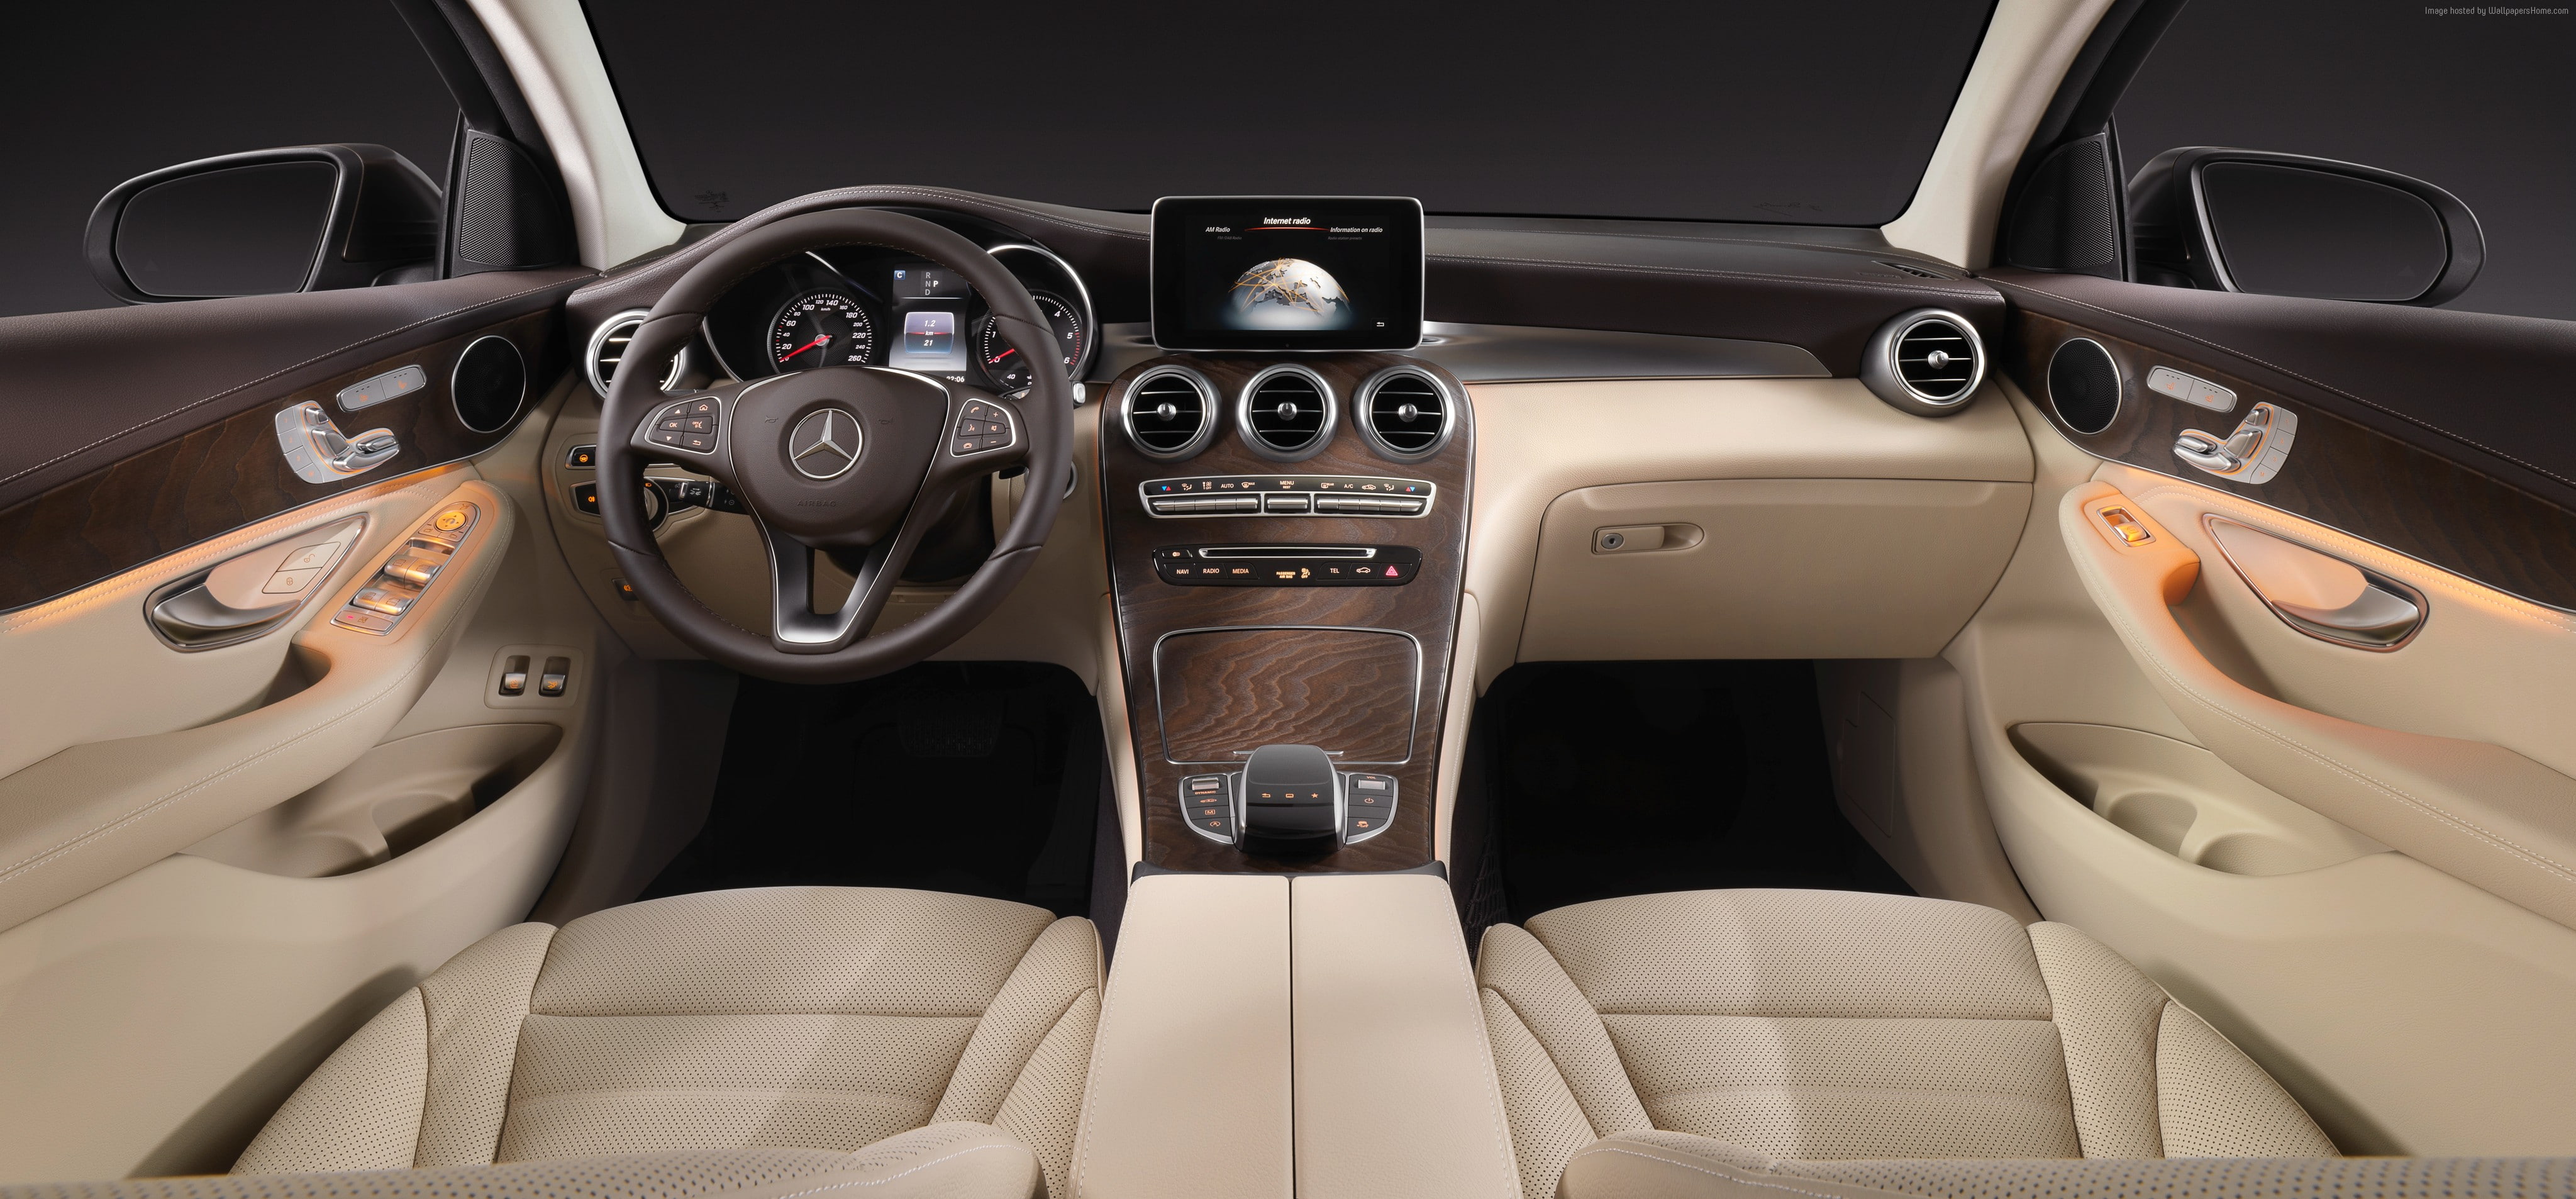 Mercedes-benz Glc klasse, interior, NYIAS 2016, coupe